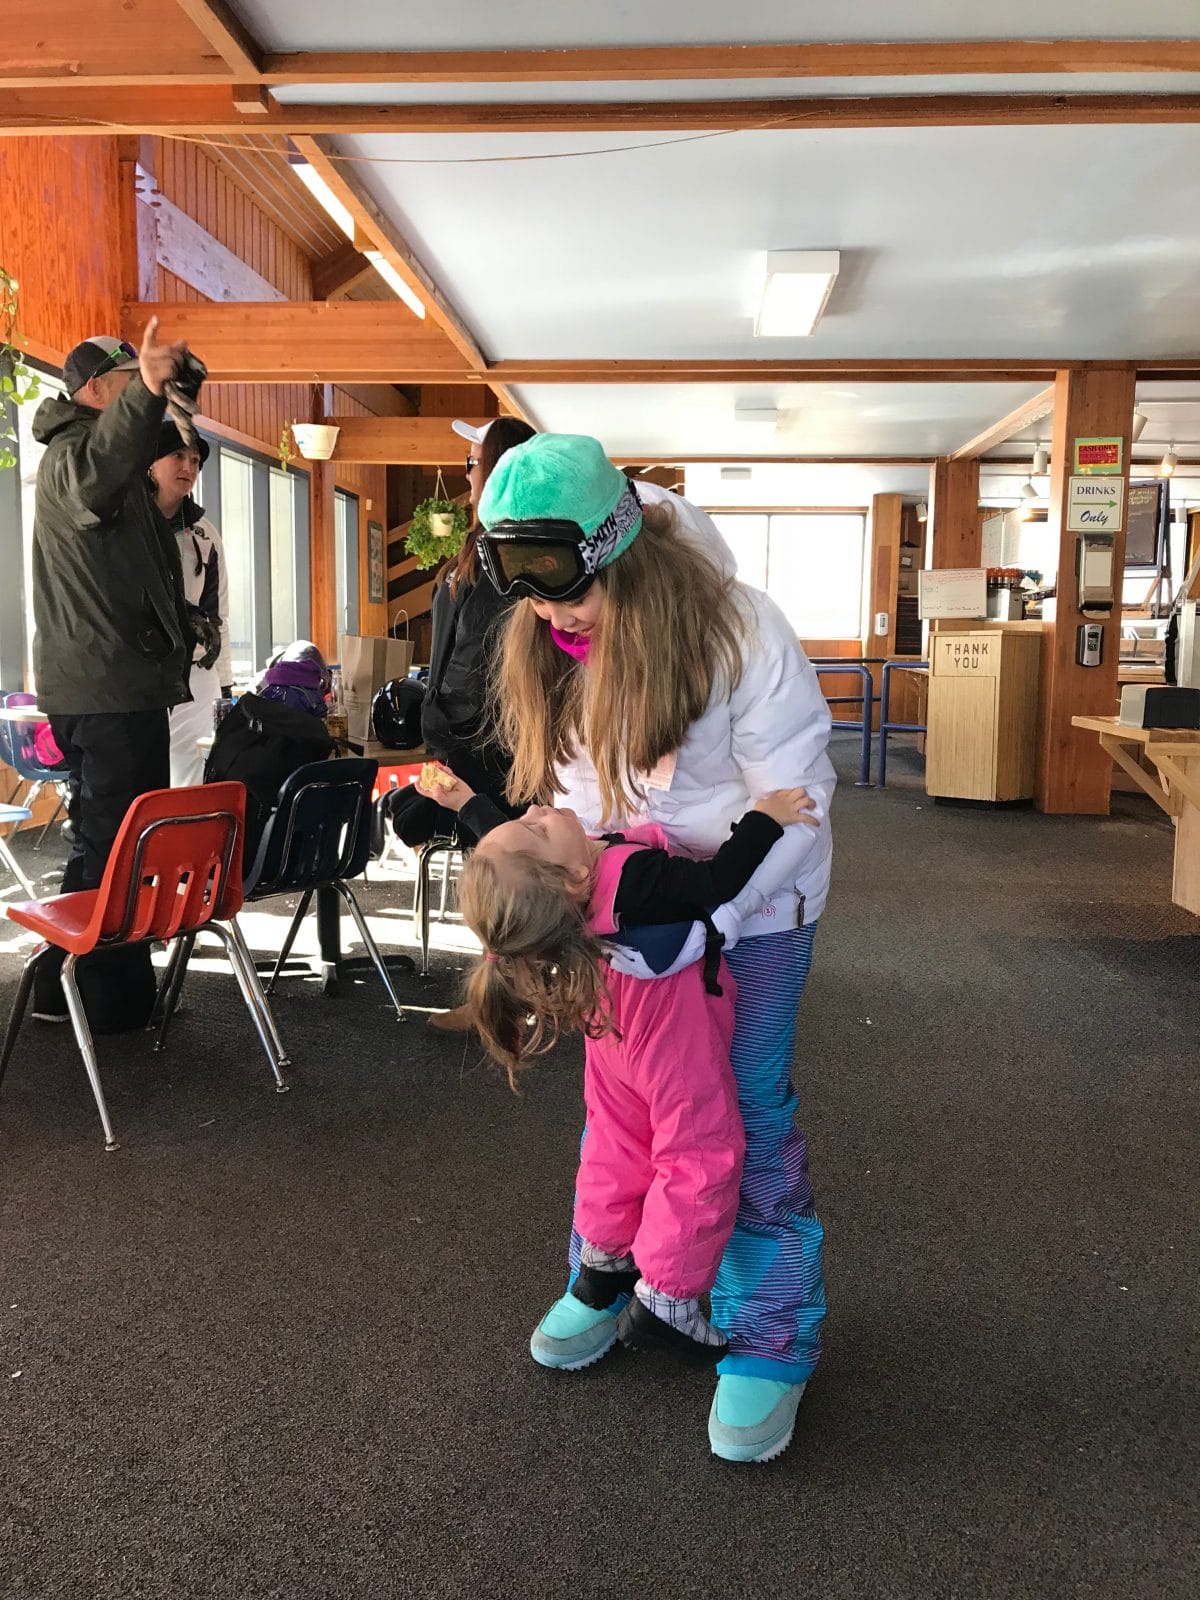 Family ski trip with toddler - ski lodge